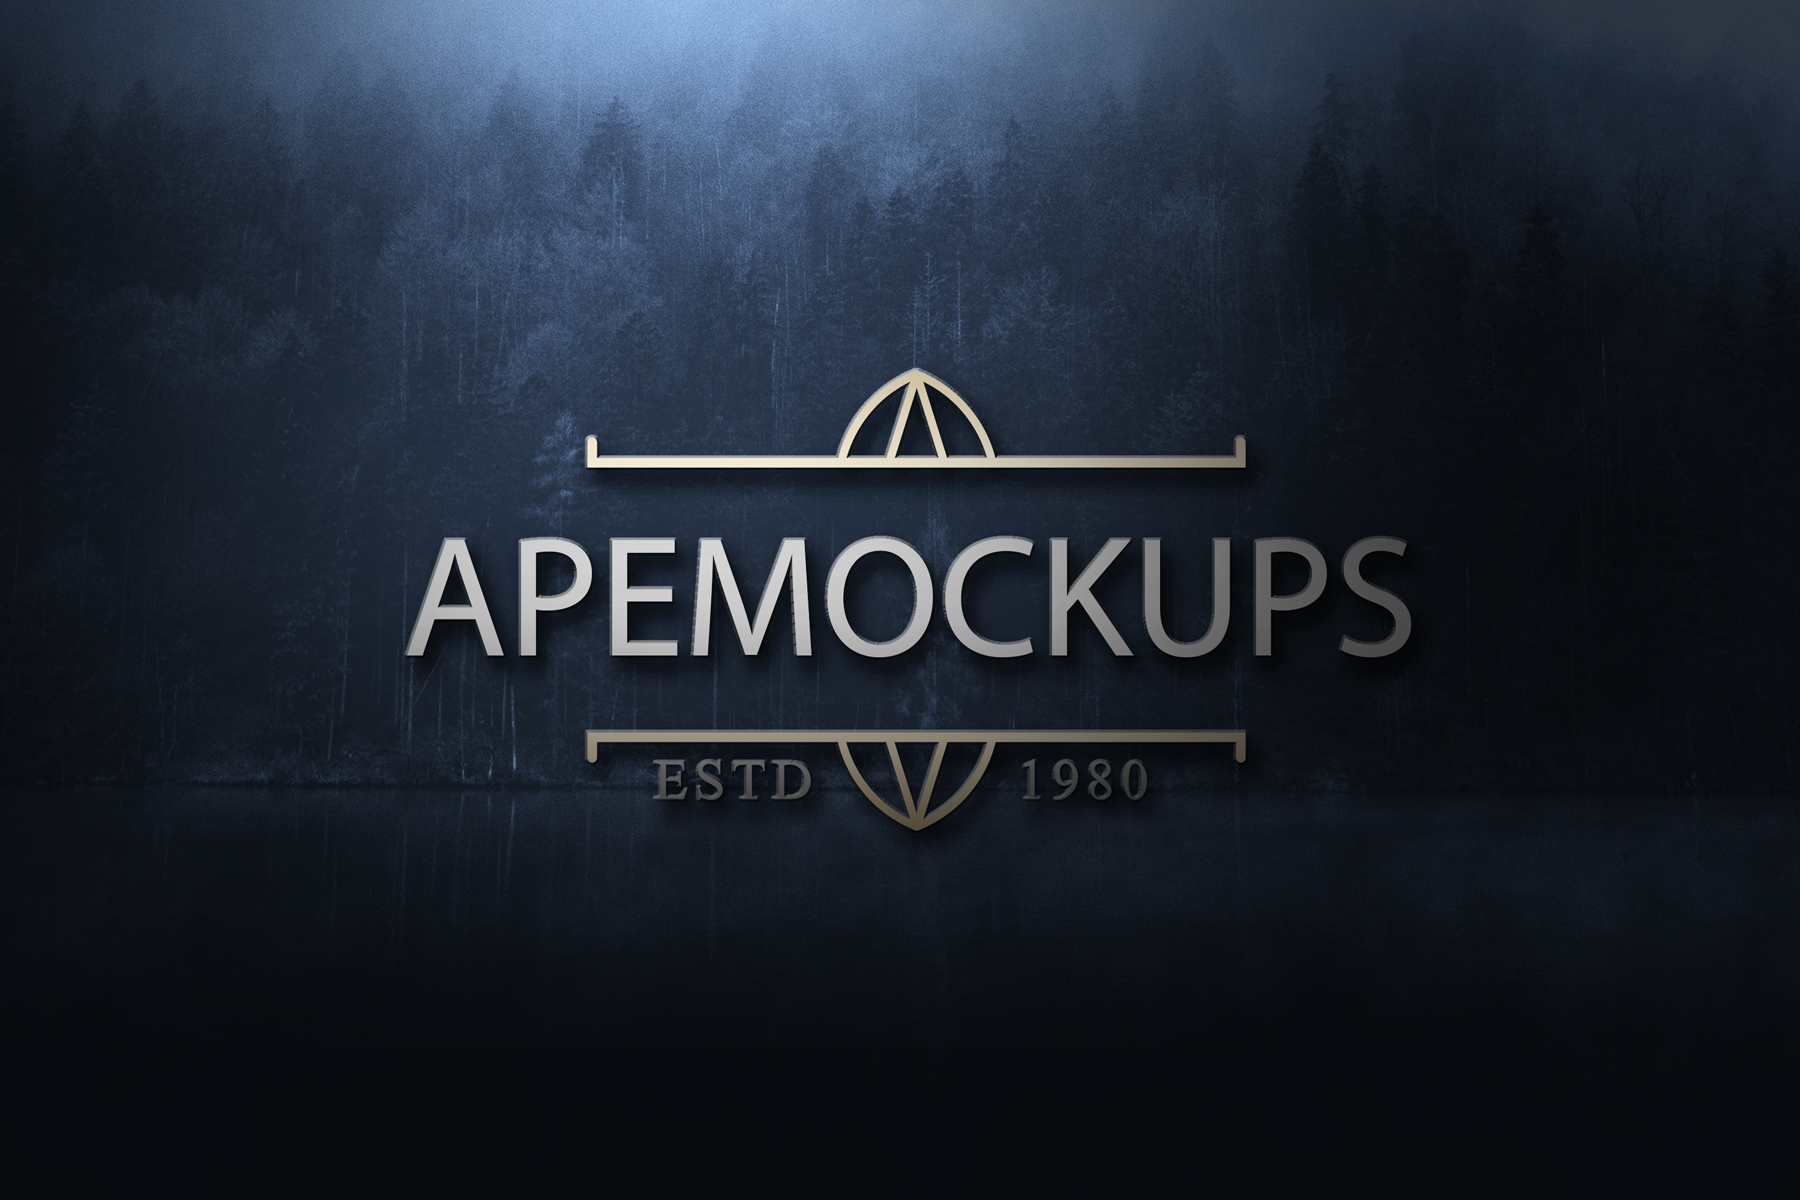 Download Dark Forest Logo Mockup PSD | Free Mockups, Best Free PSD Mockups - ApeMockups